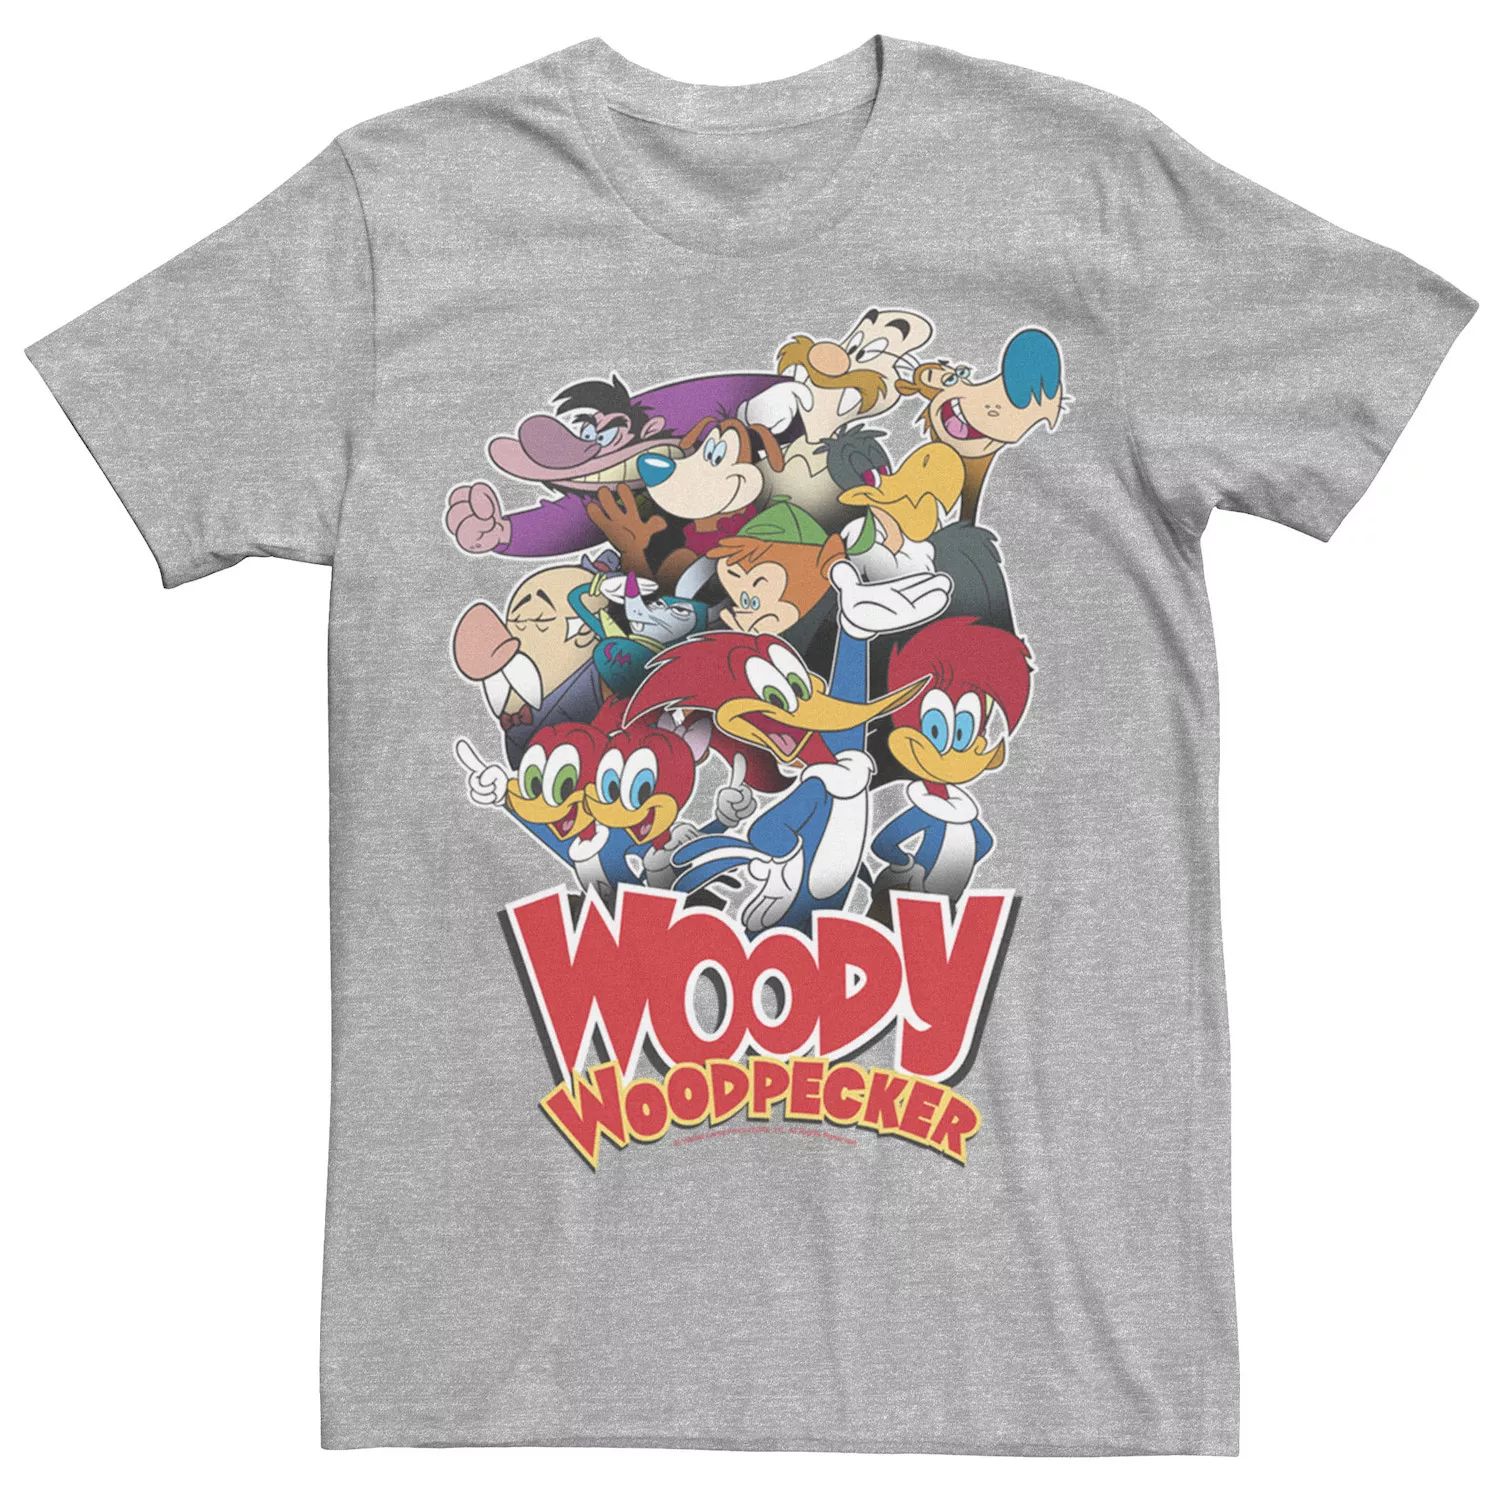 Мужская винтажная футболка с плакатом Woody Woodpecker Group Shot Licensed Character